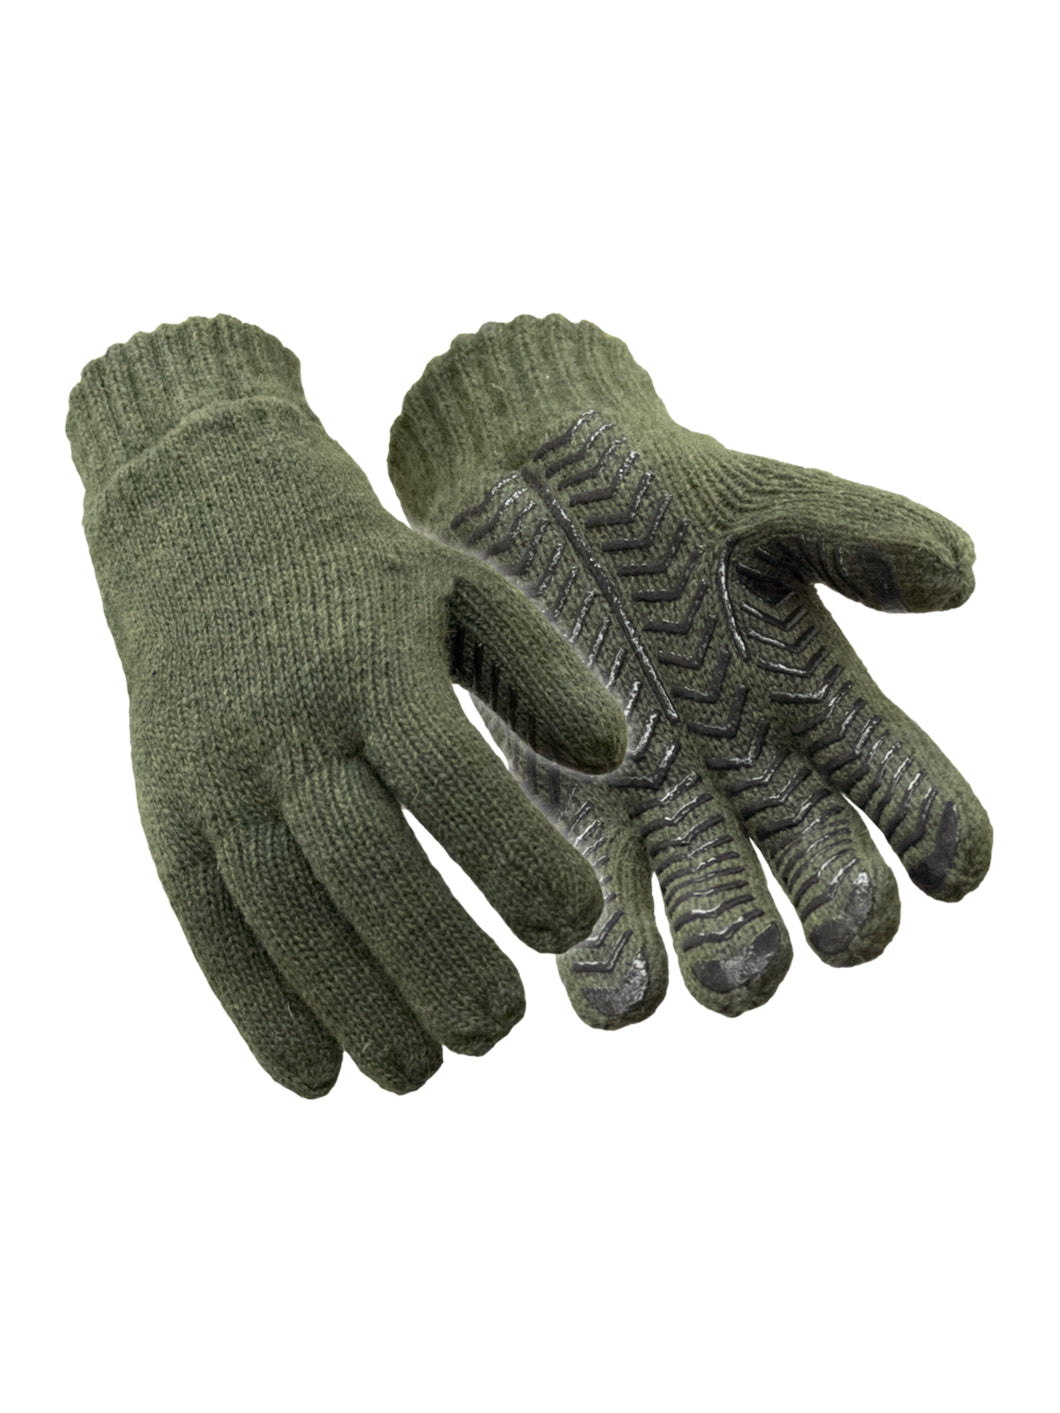 Insulated Wool Grip Glove